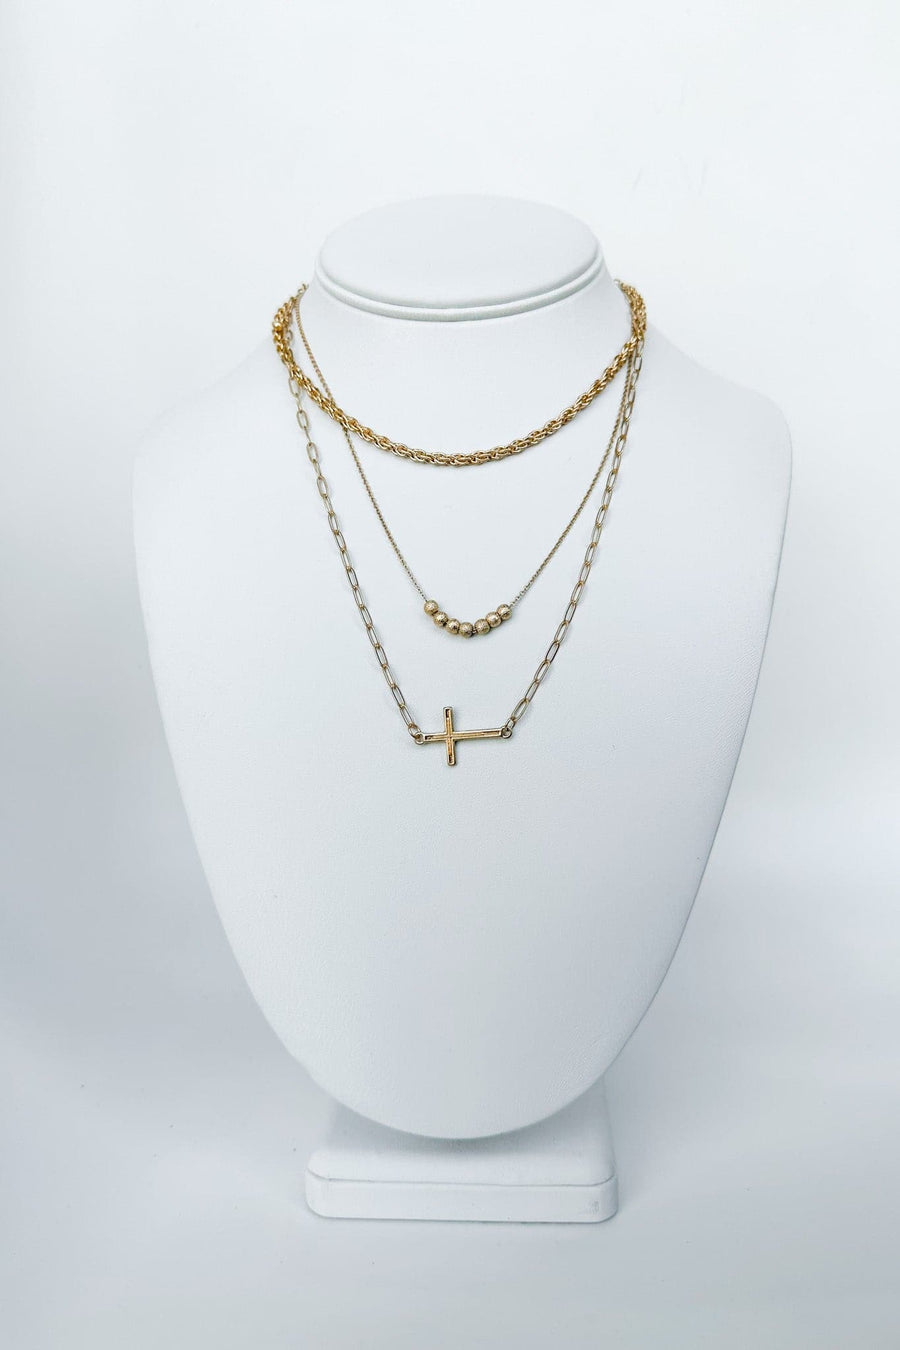 Gold Pomeline Cross Chain Layered Necklace - kitchencabinetmagic